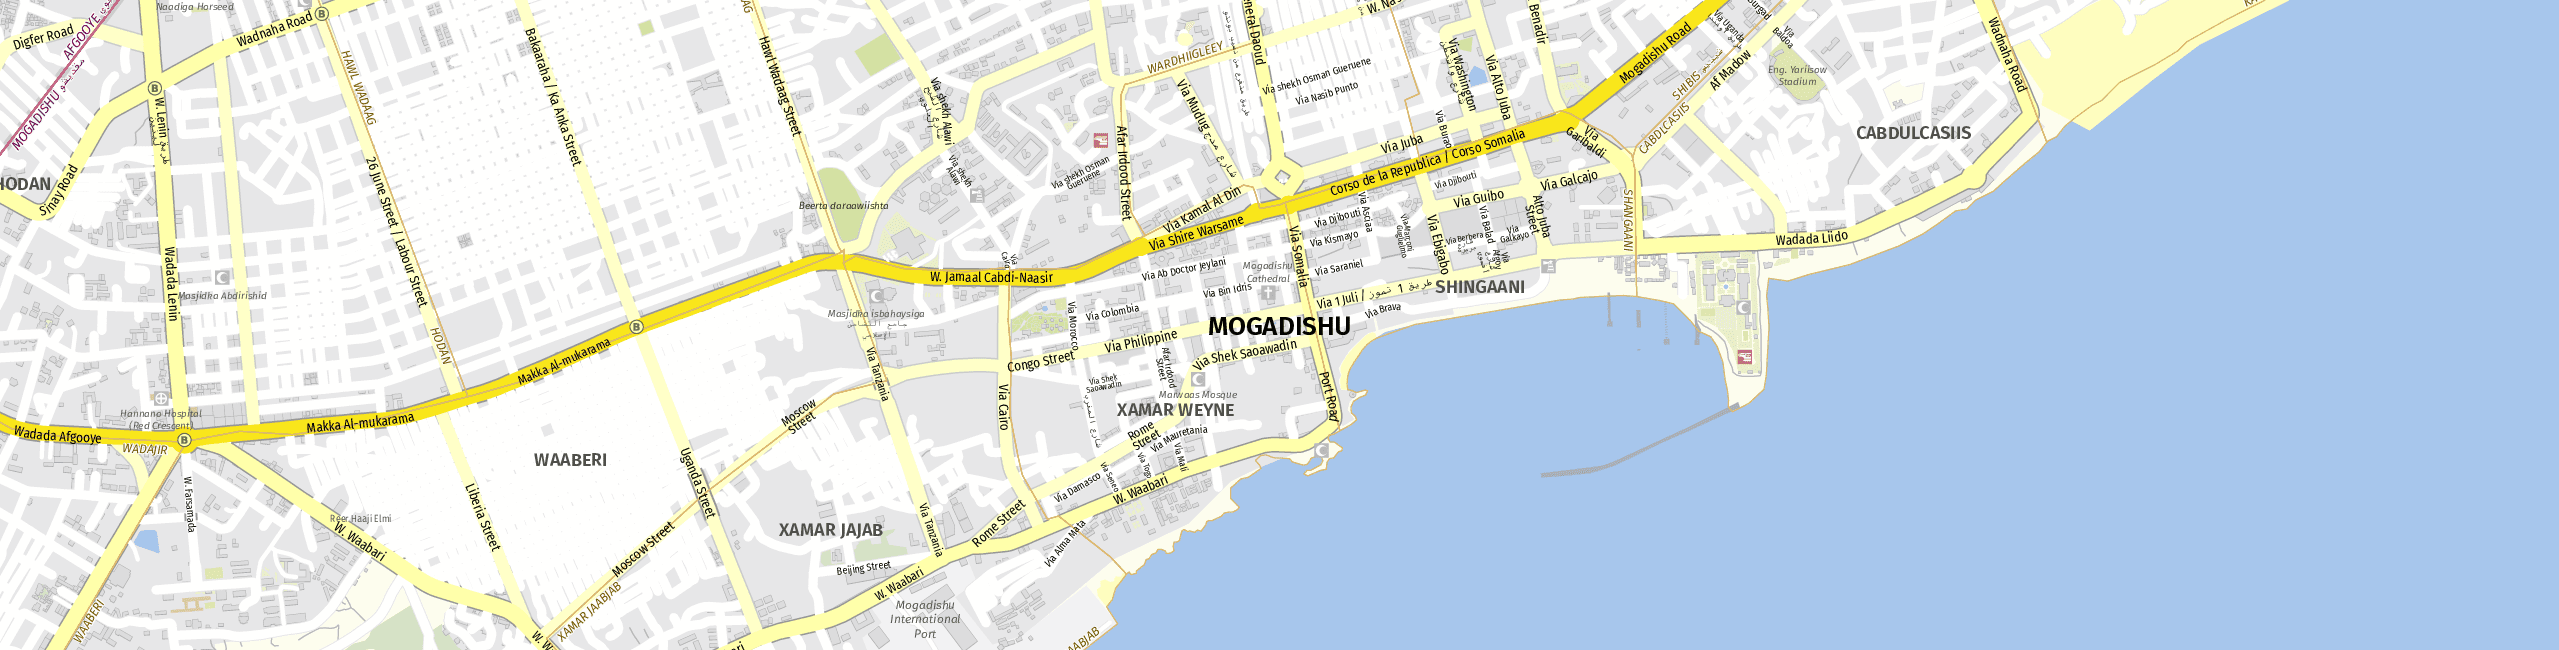 Stadtplan Mogadishu zum Downloaden.